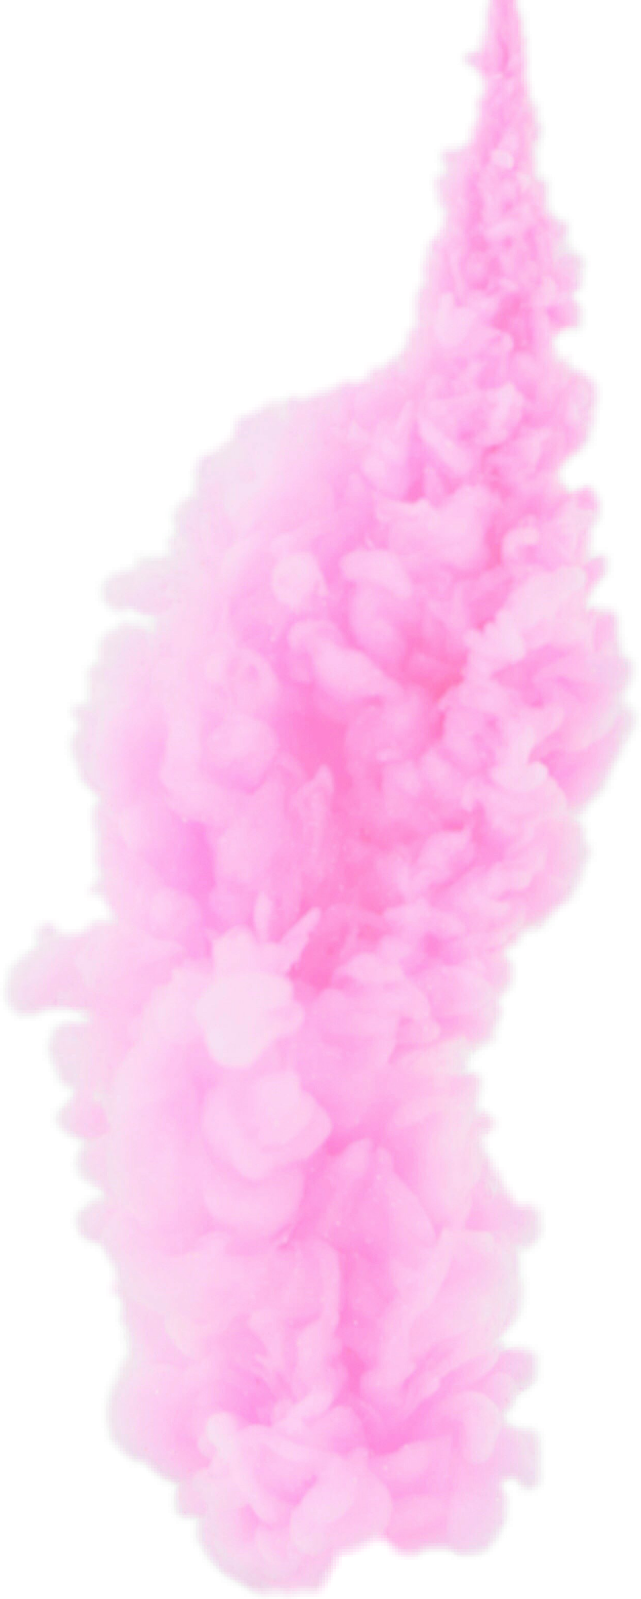 Smoke Effect Purple Transparent Background